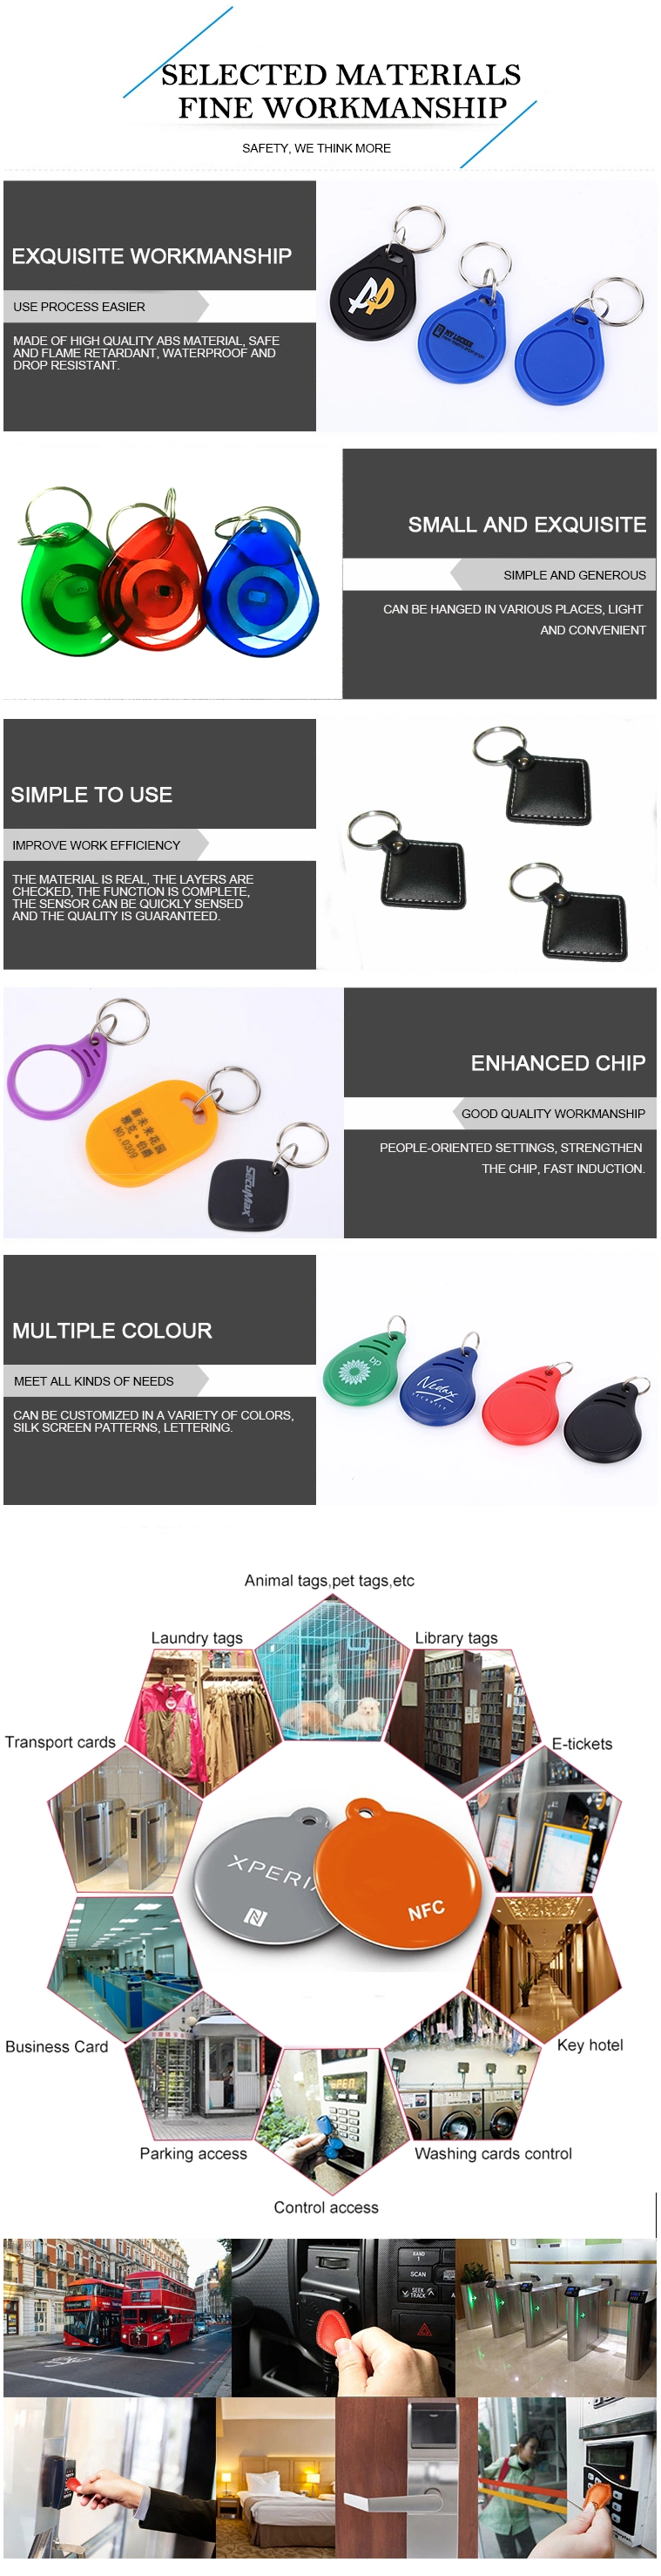 Wholesale 125kHz Blank Plastic Smart RFID Key Tags/Keychain/Keyfob for Club